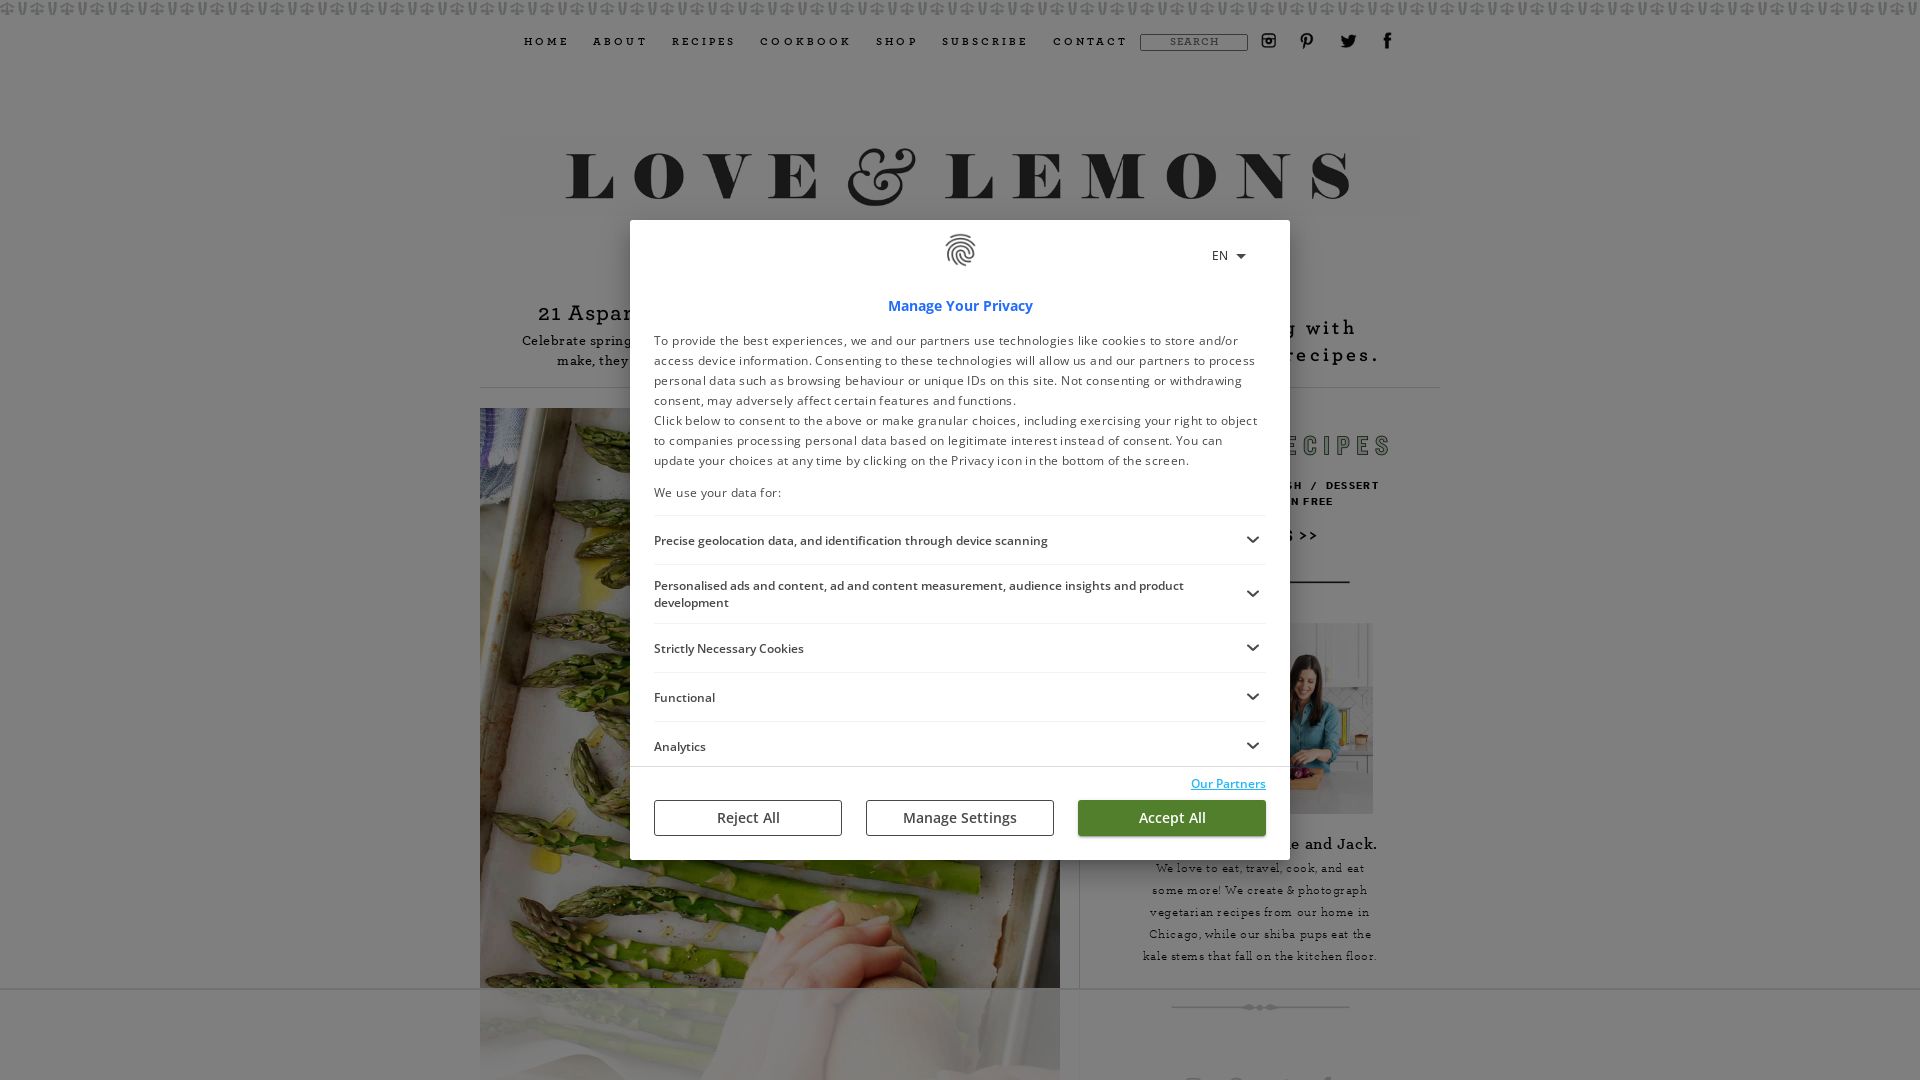 Website status loveandlemons.com is   ONLINE